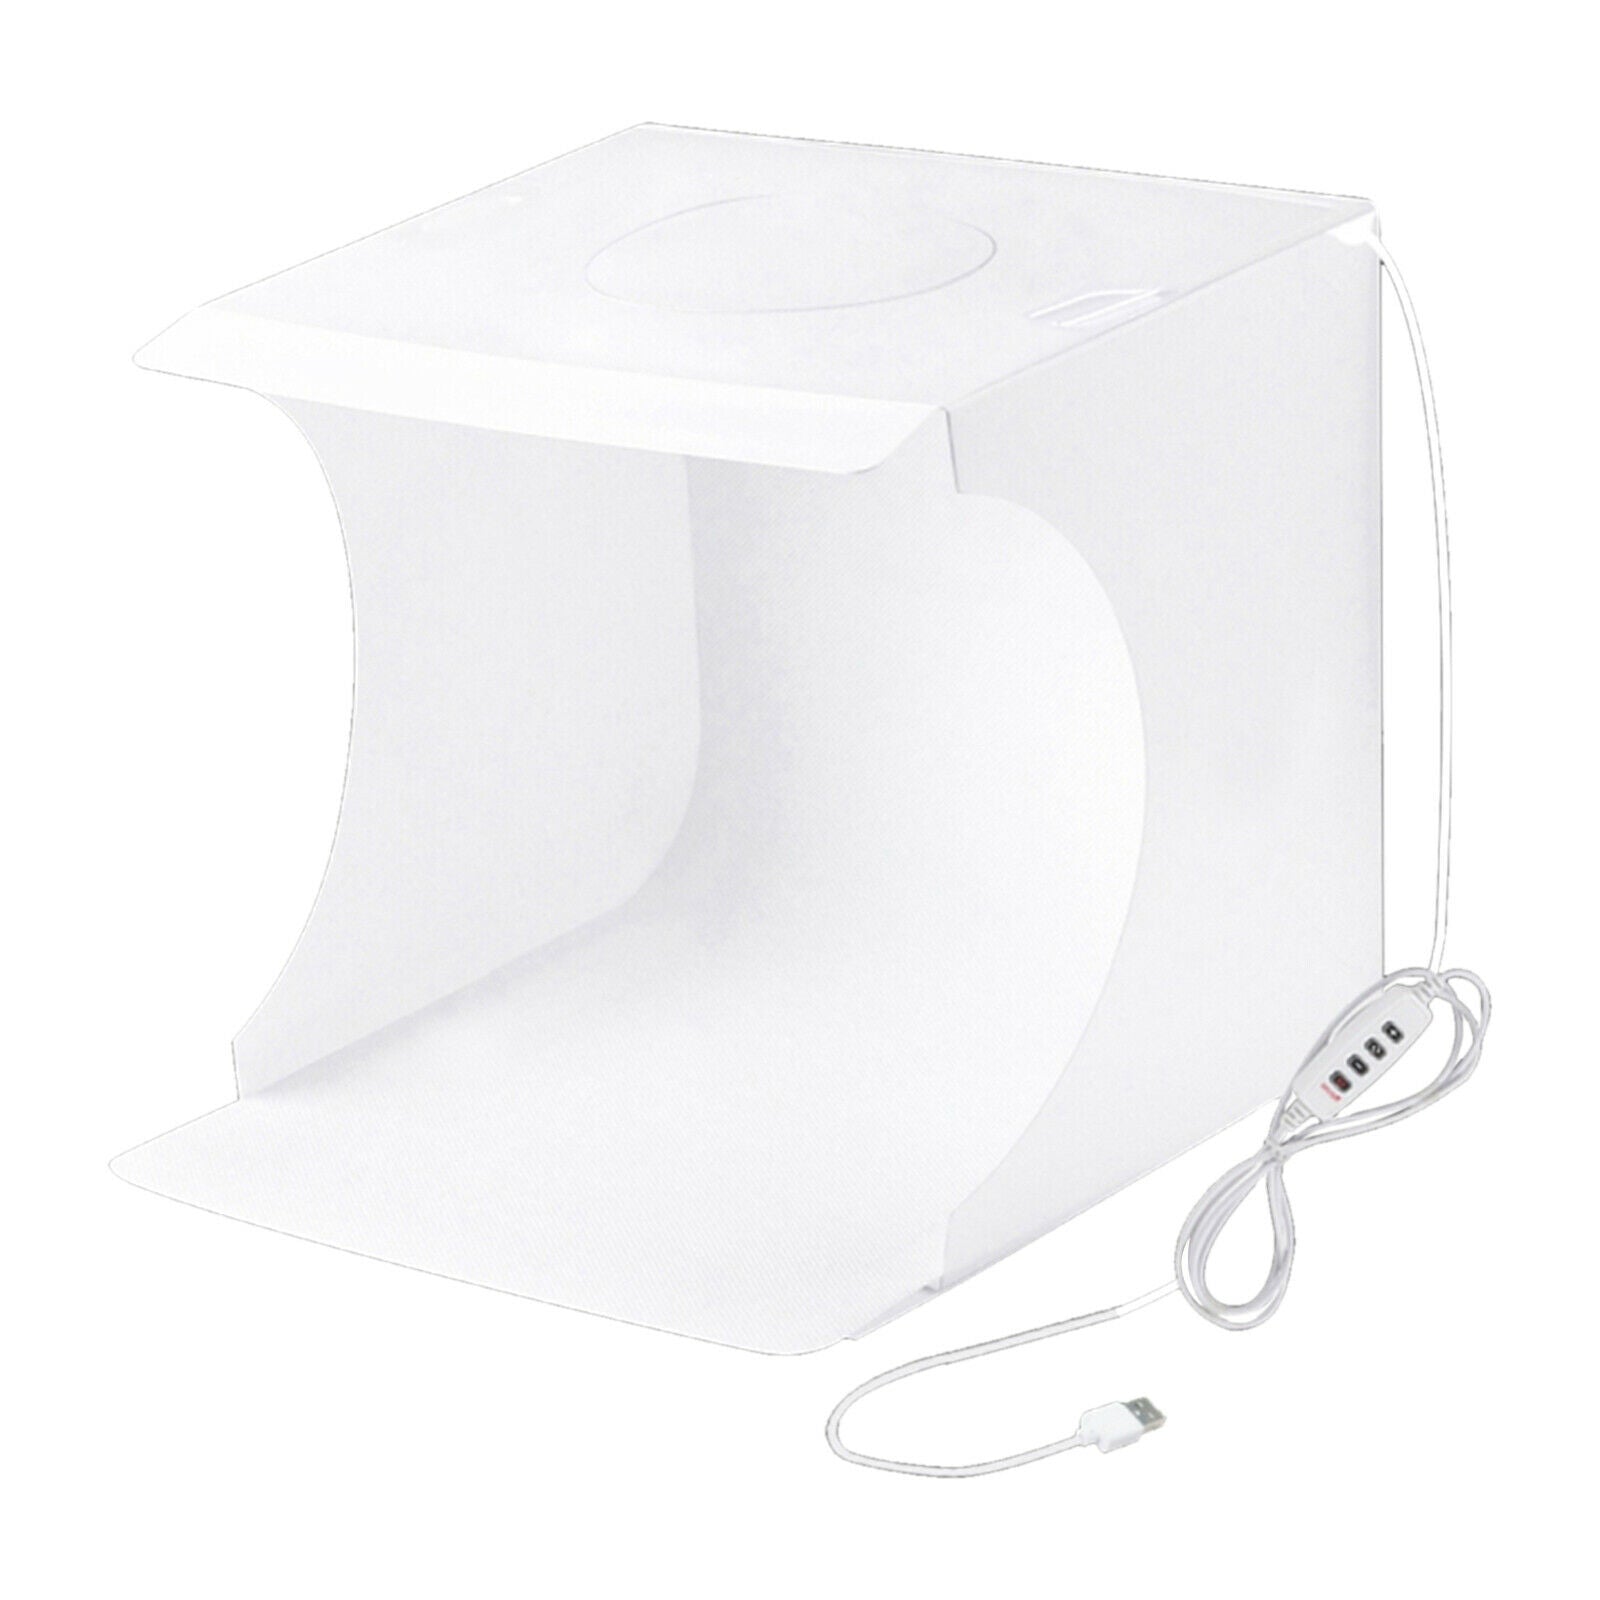 Folding Photography Light Tent Kit LED Light + 6 Kind of Color Backgrounds